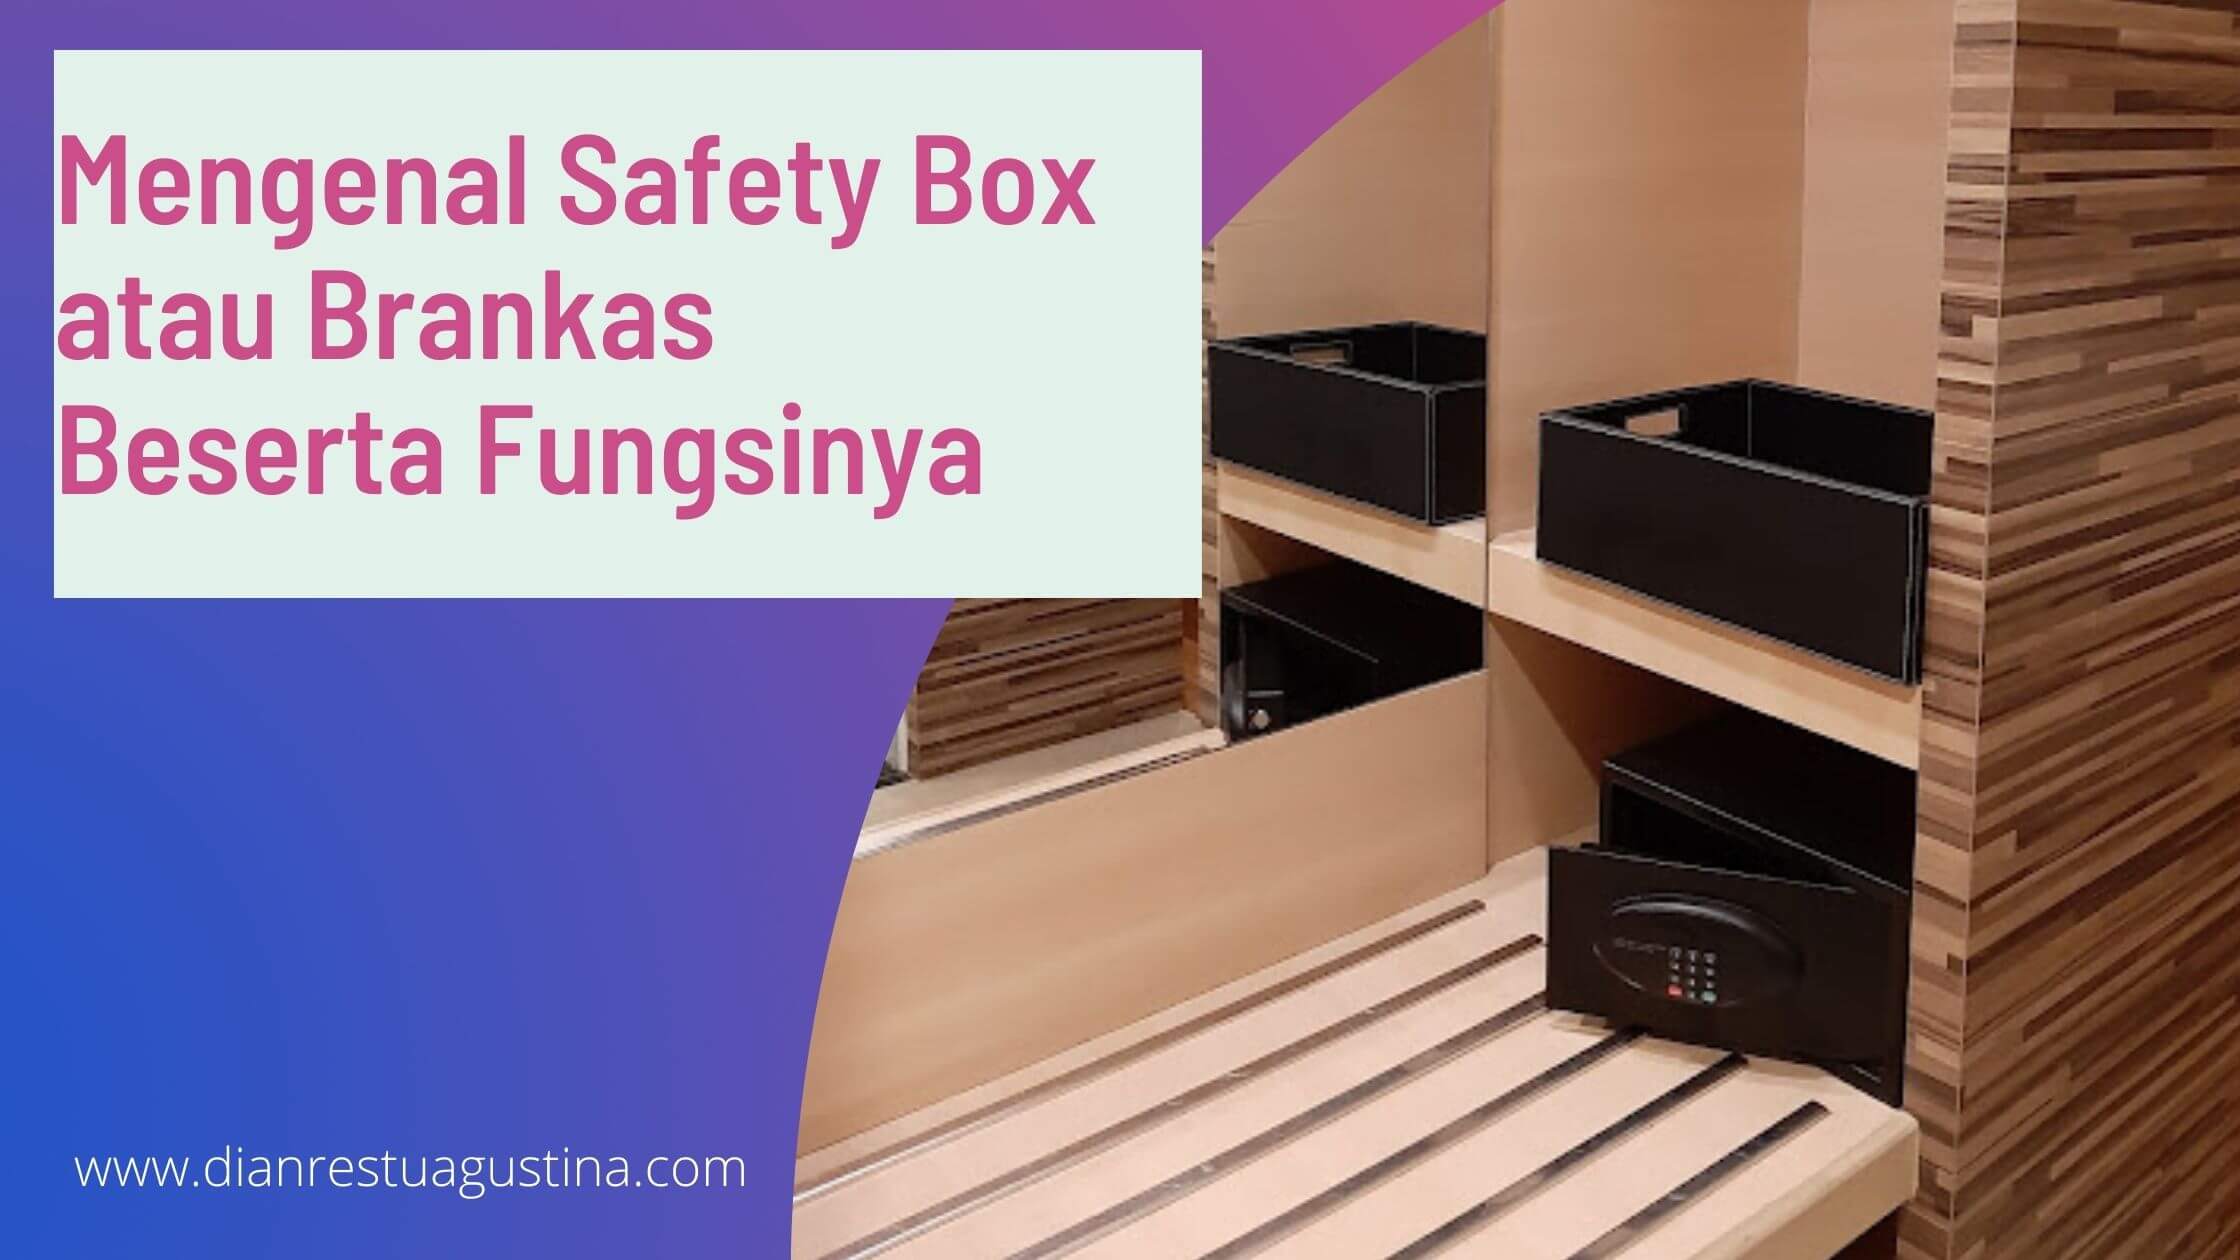 Mengenal Safety Box atau Brankas Beserta Fungsinya